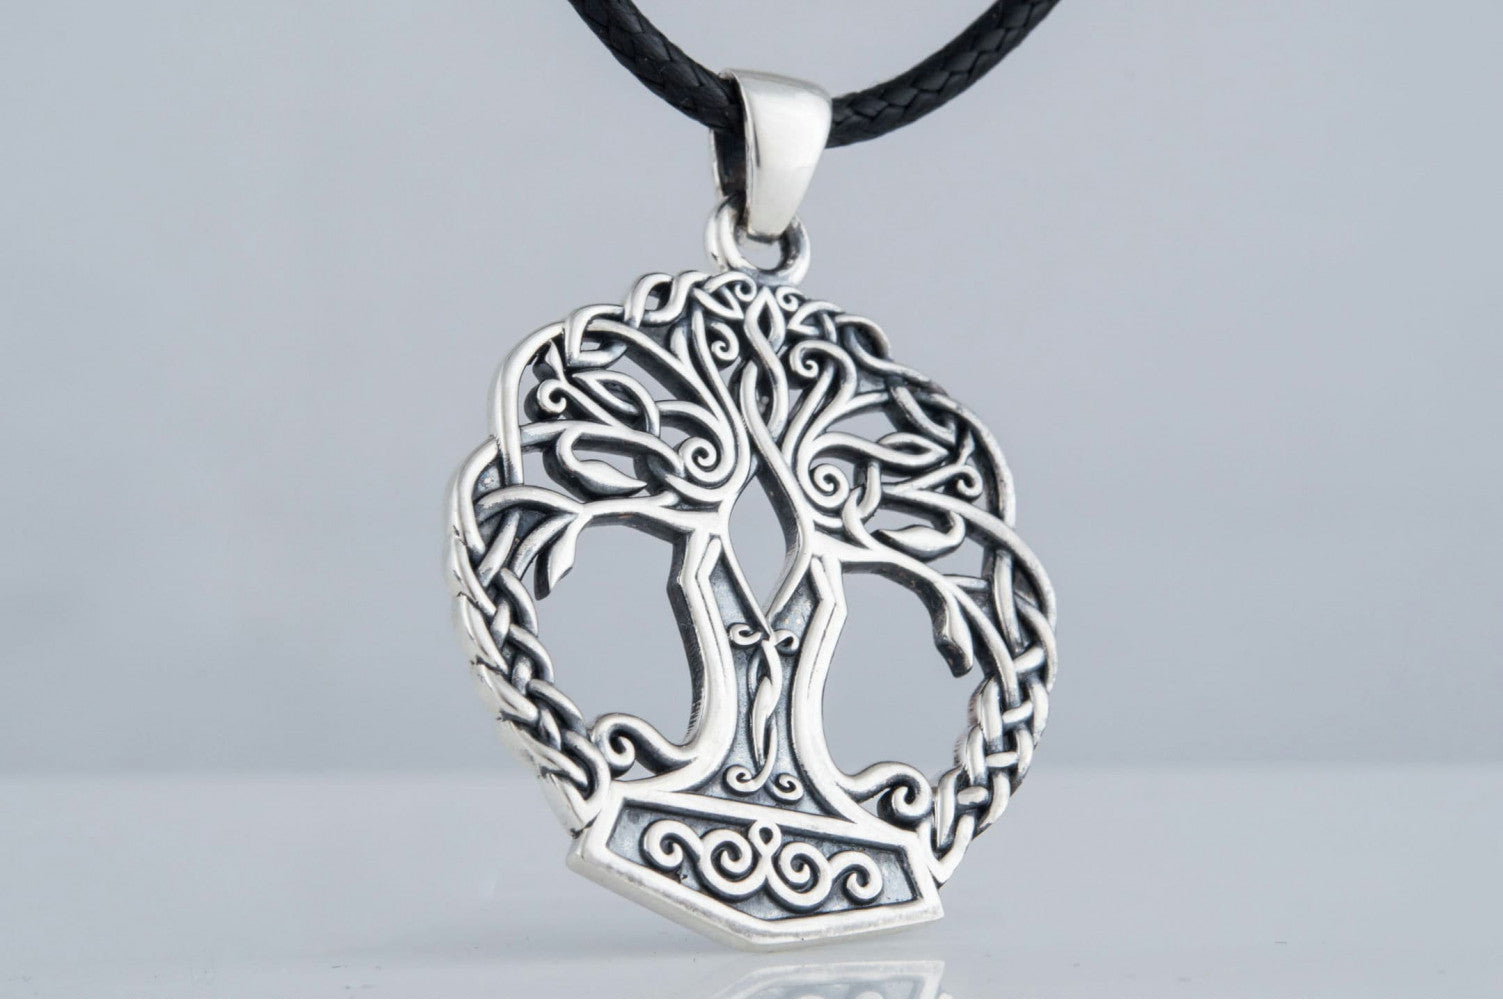 Yggdrasil with Mjolnir Pendant Handmade Sterling Silver Viking Necklace - vikingworkshop